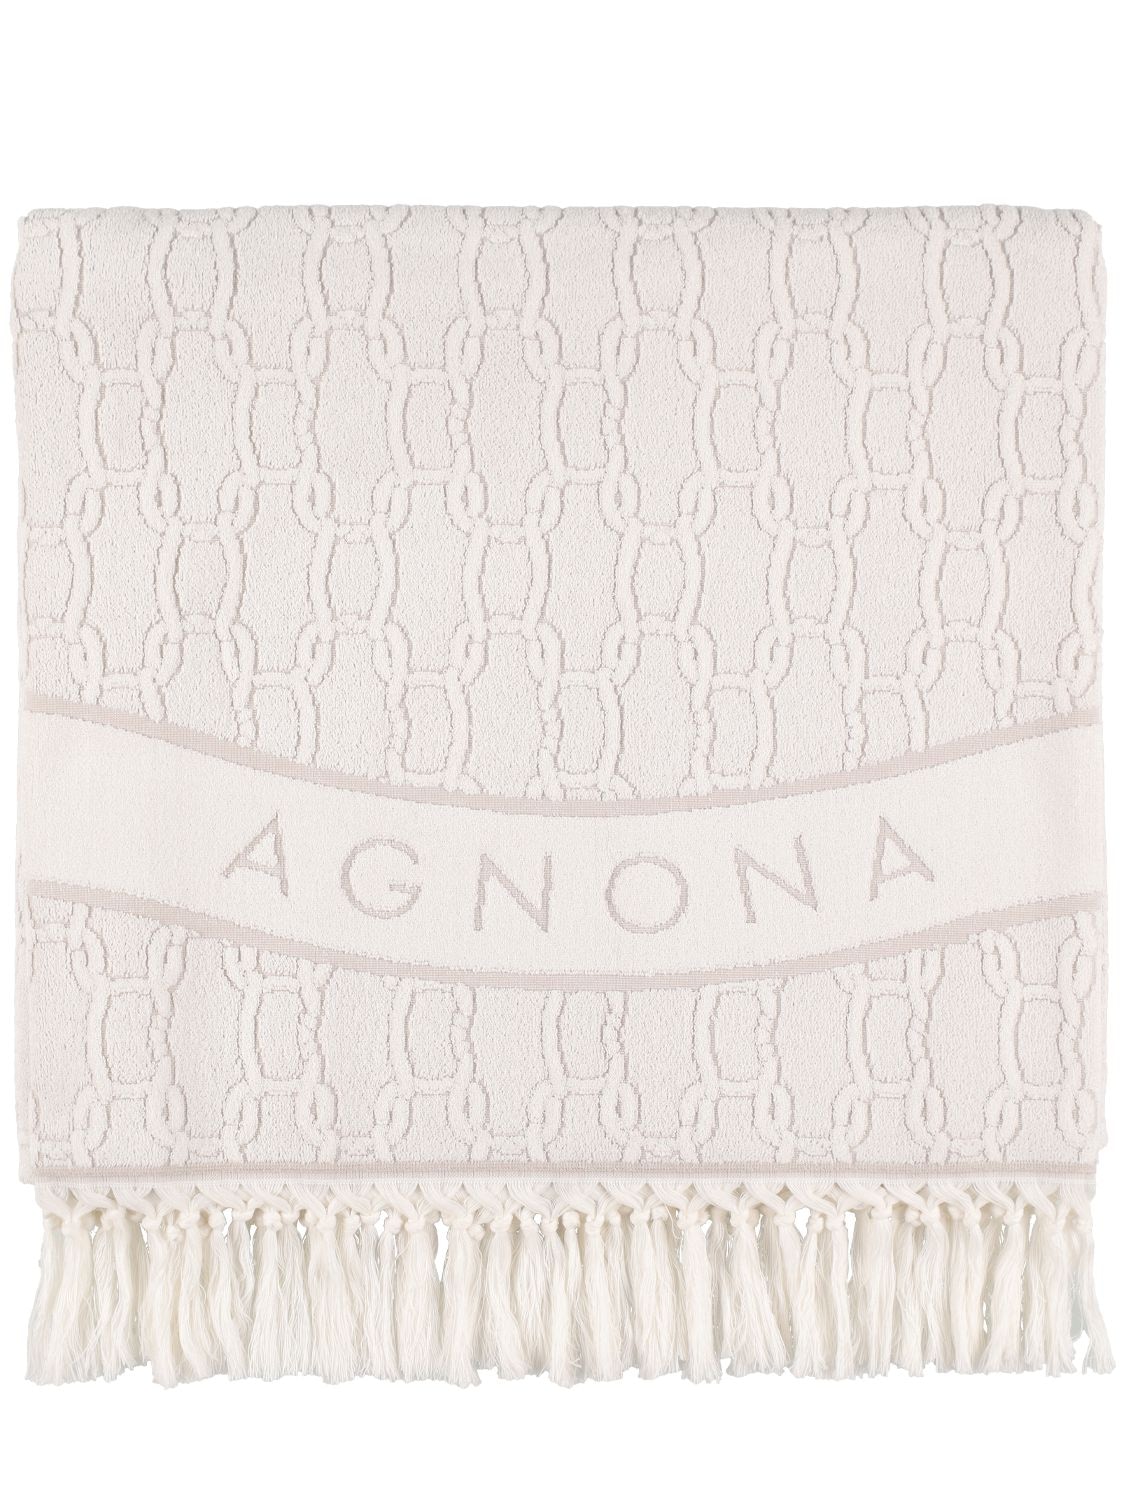 Agnona Chain Jacquard Towel In Stone